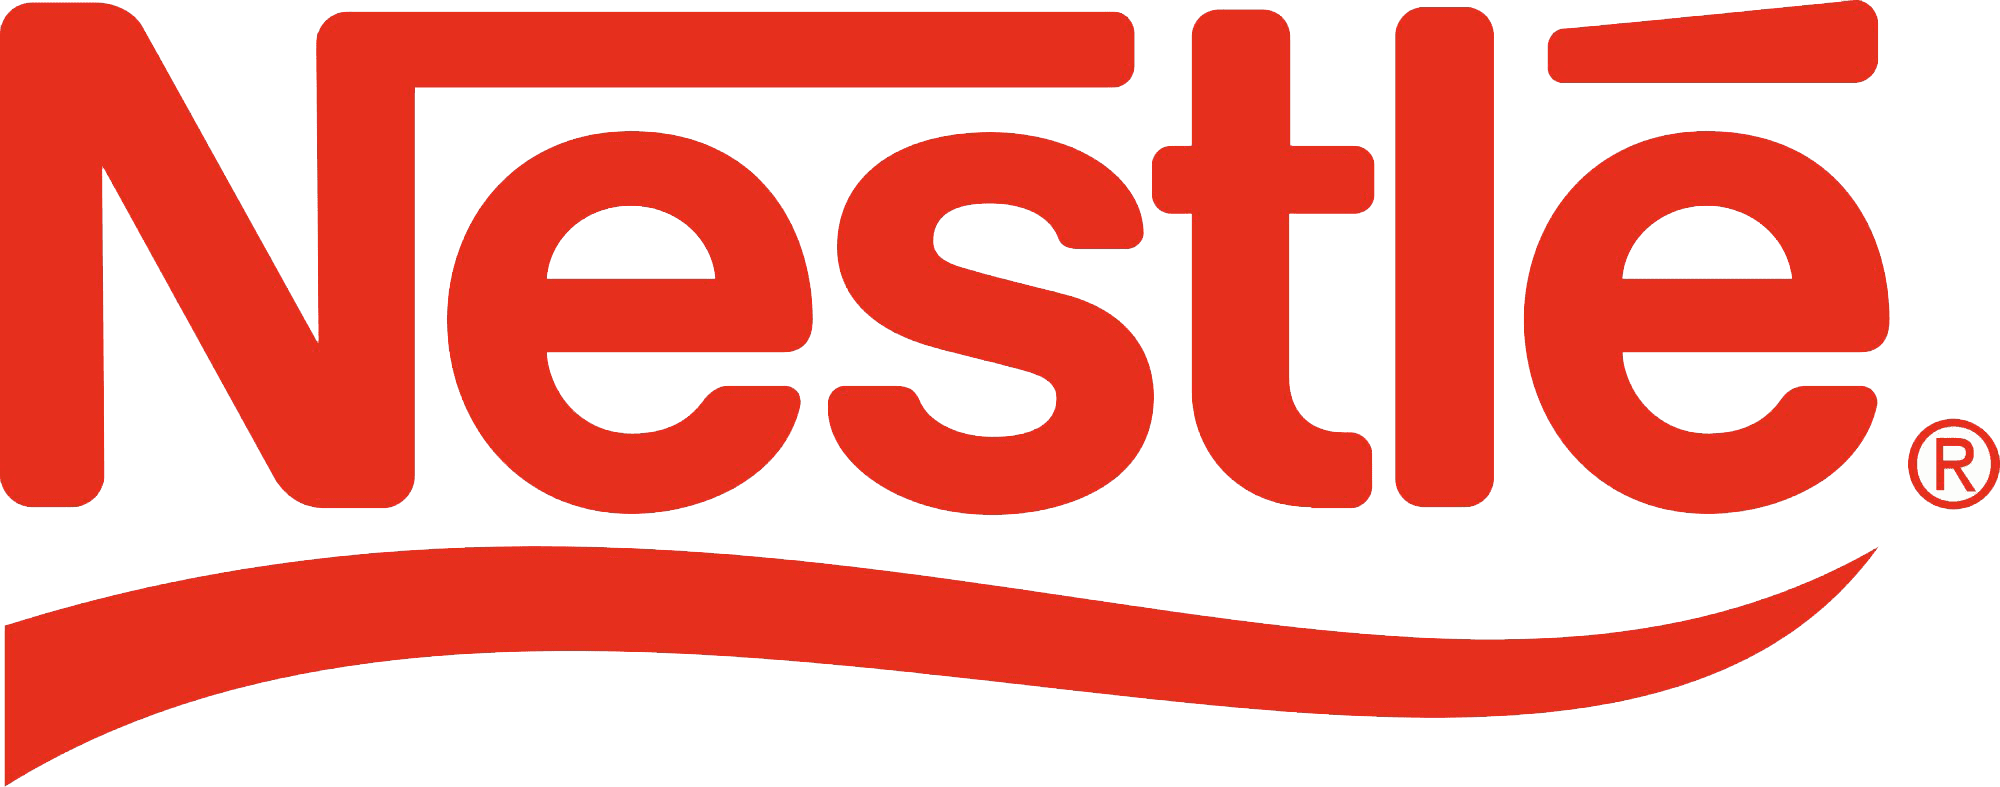 Nestle Net Profit Soars 37% to Rs 698.34 Crore